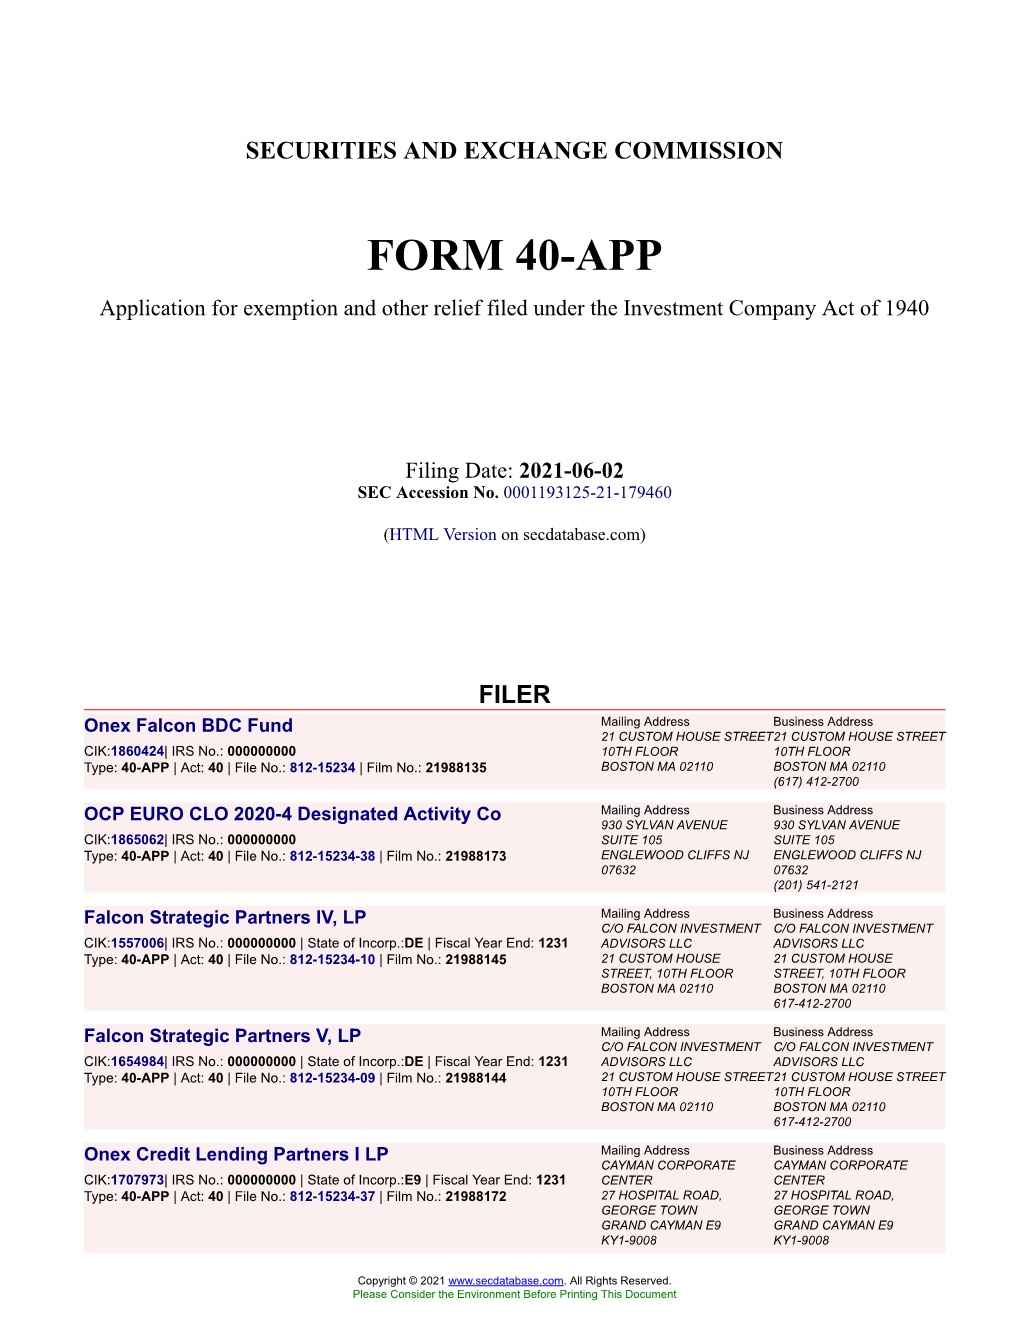 Onex Falcon BDC Fund Form 40-APP Filed 2021-06-02